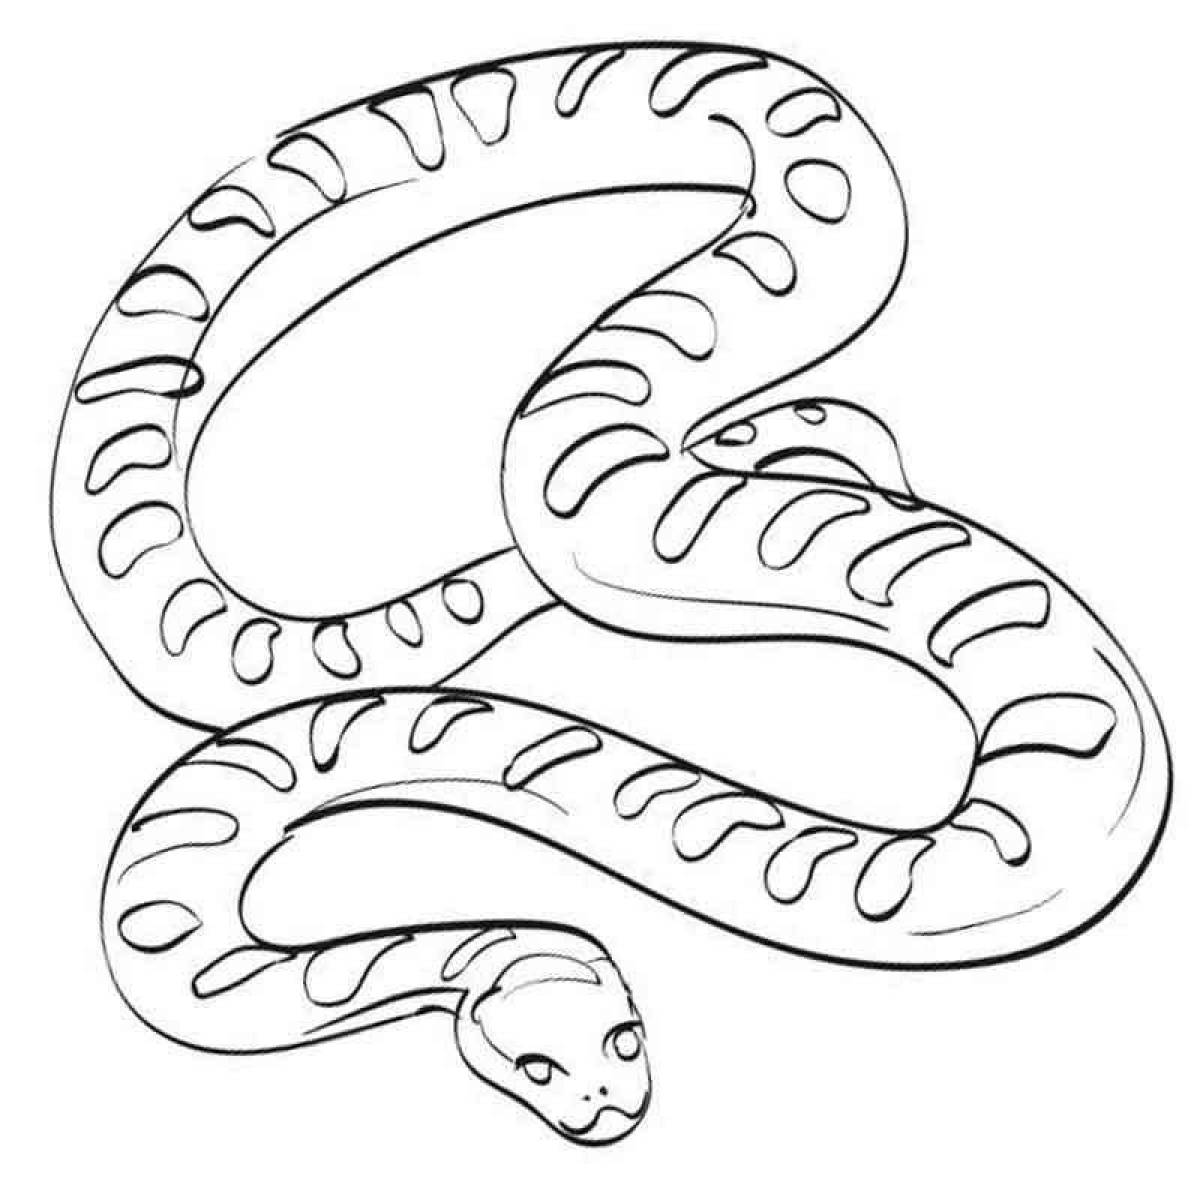 Glitter snake coloring book